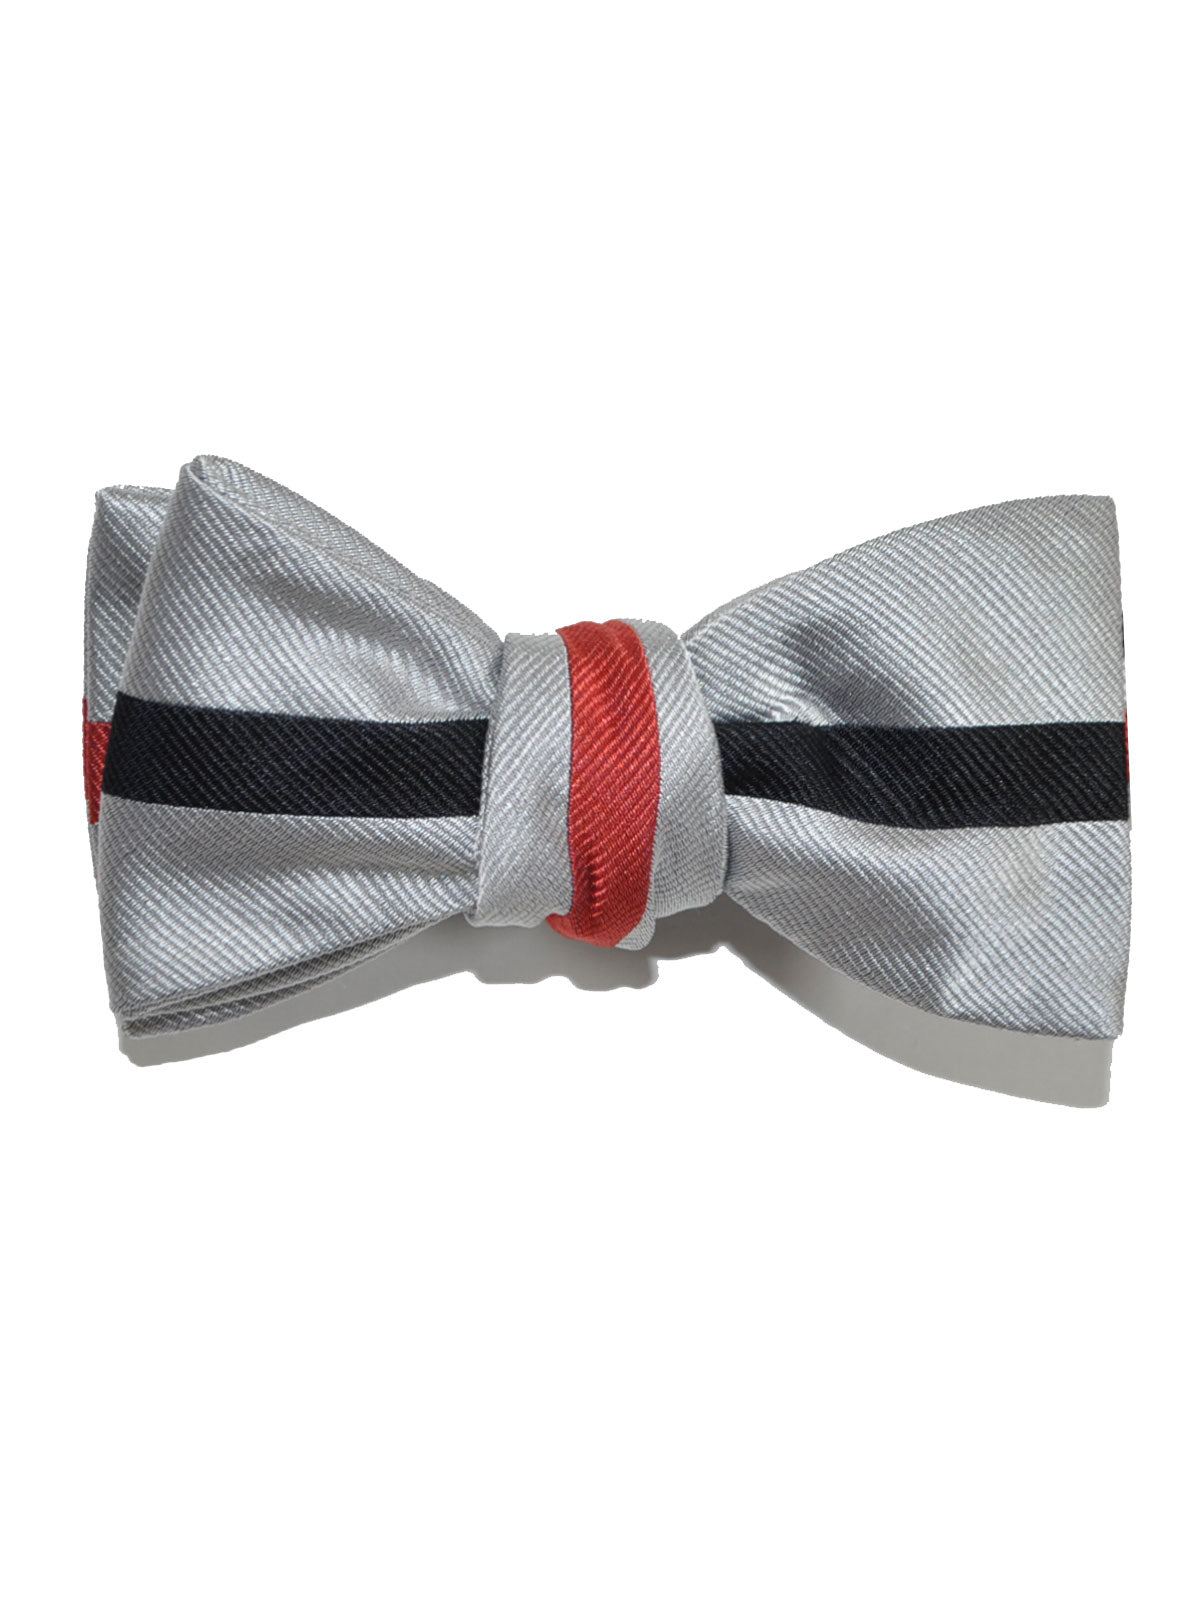 Gene Meyer Silk Bow Tie Black Gray Red Stripe - Hand  Made In Italy